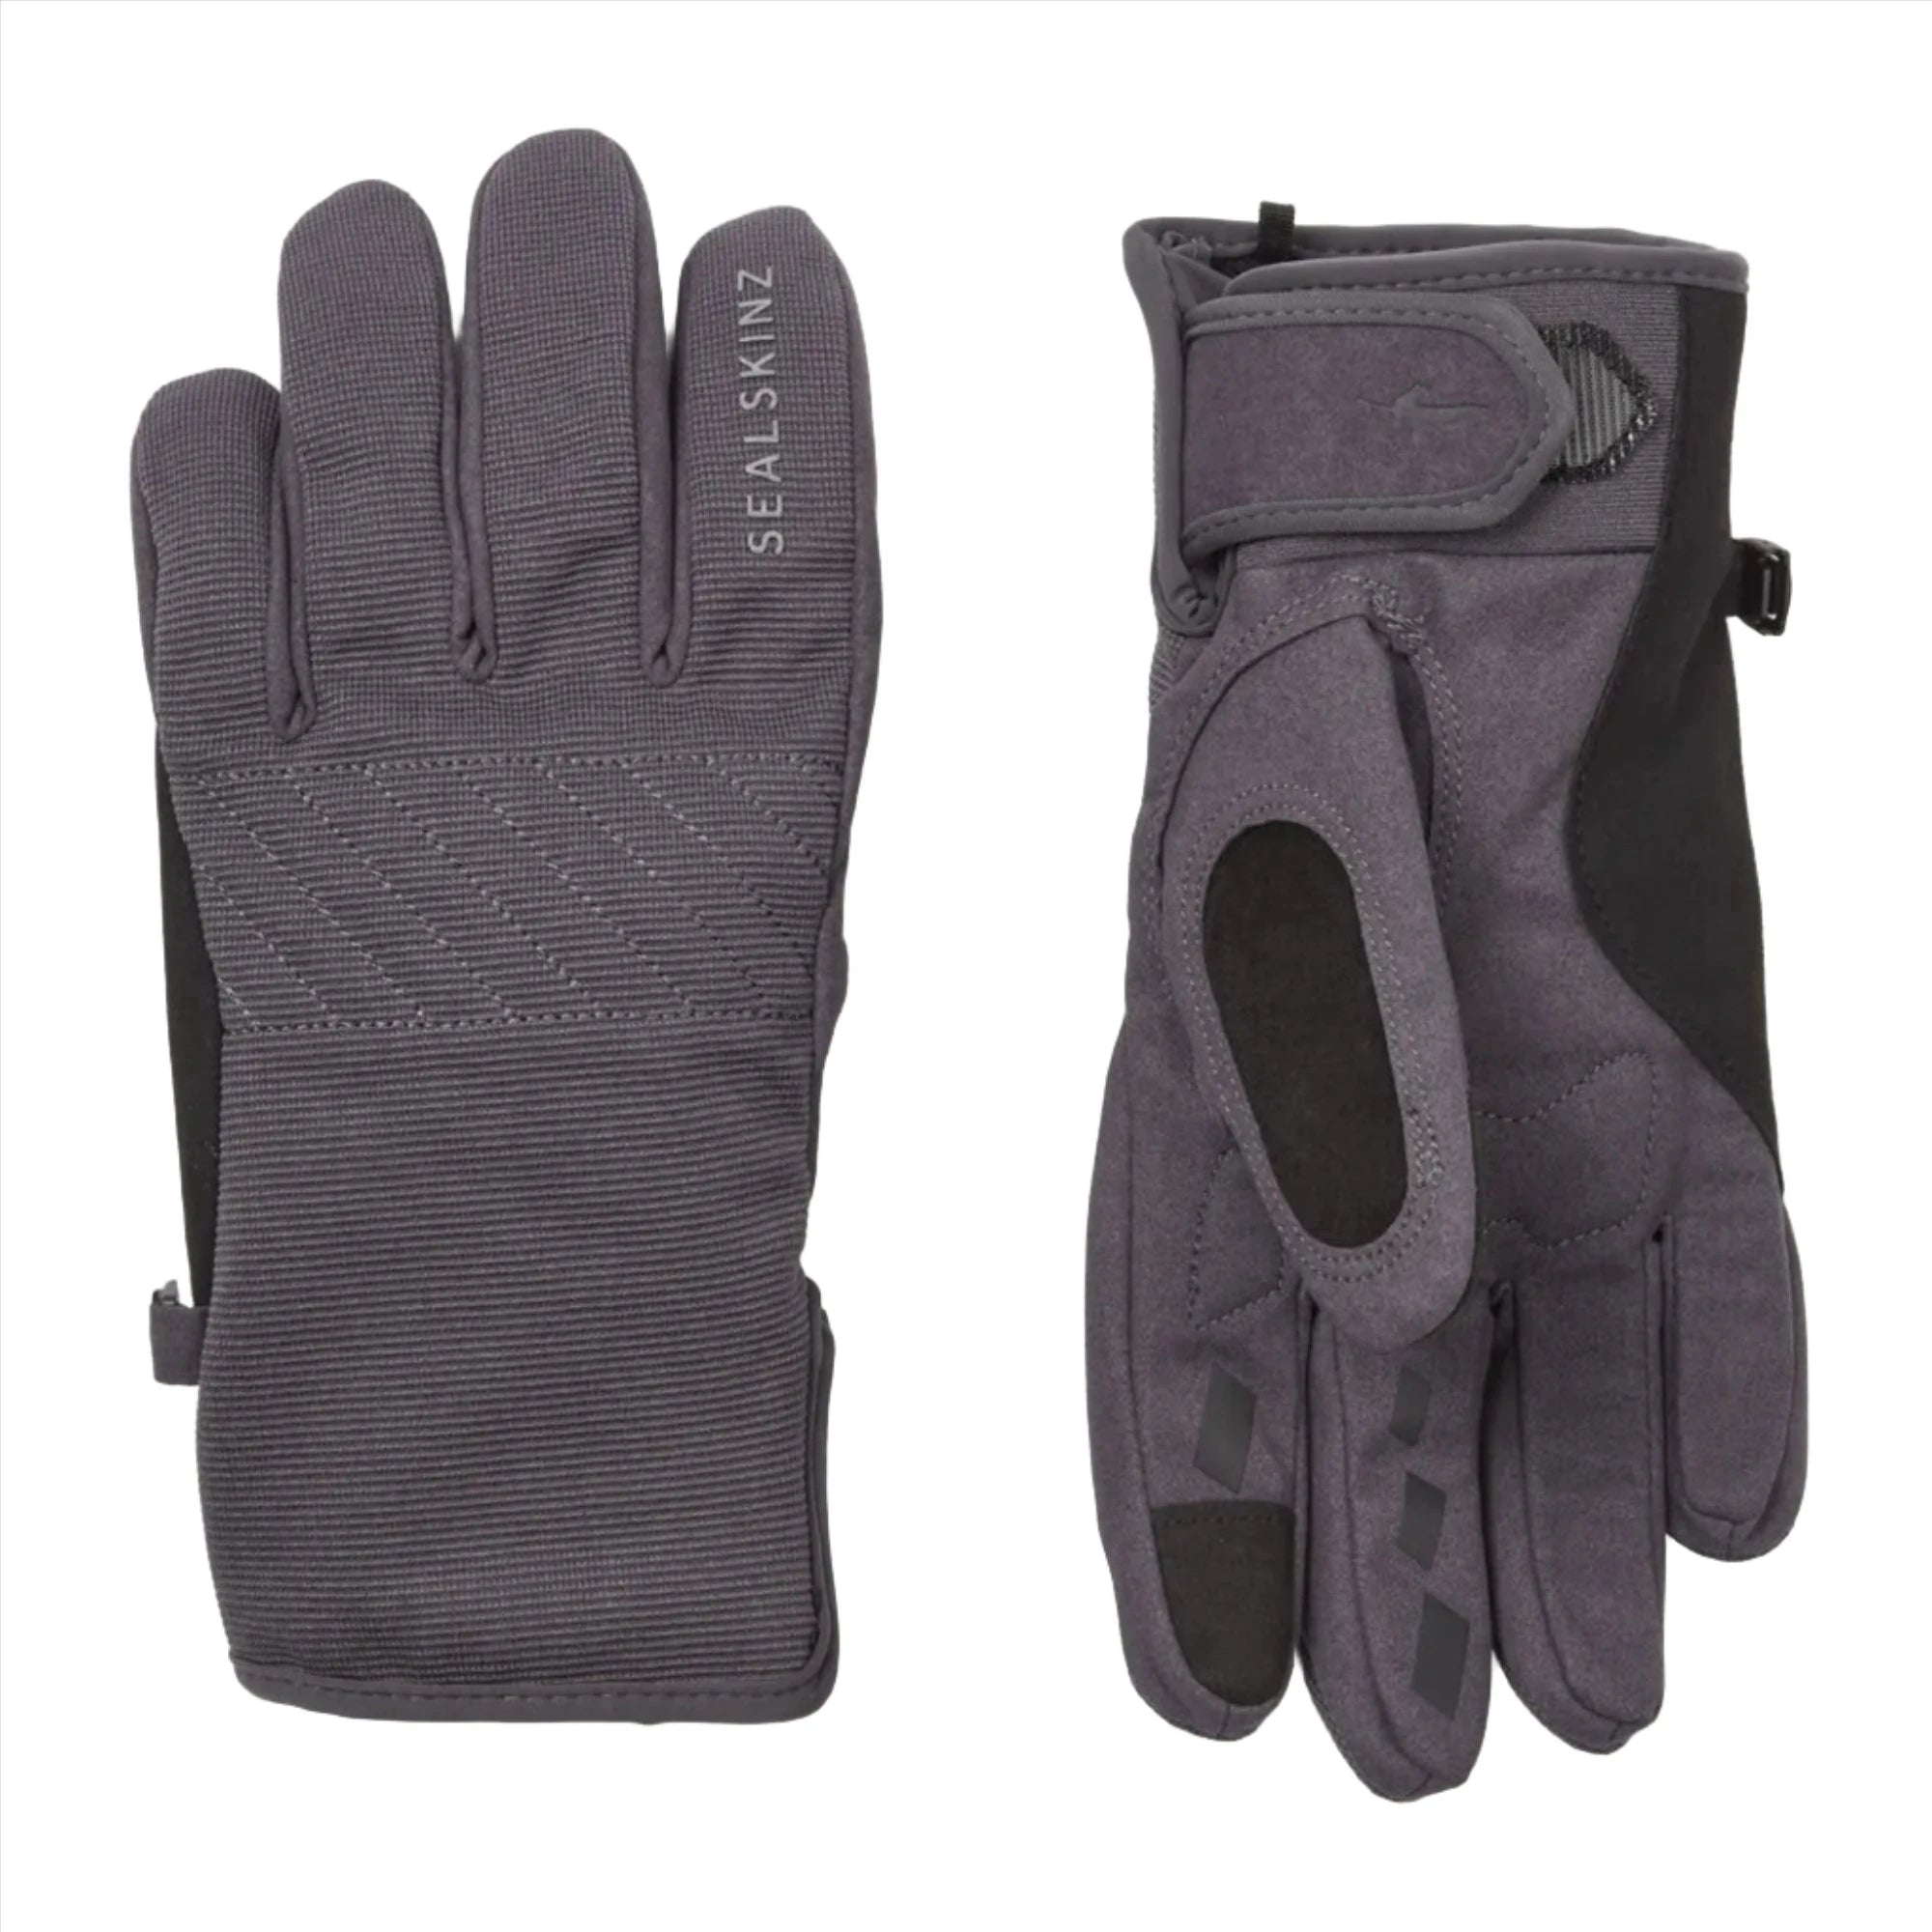 Howe Waterproof All Weather Multi-Activity Gloves - Grey/Black